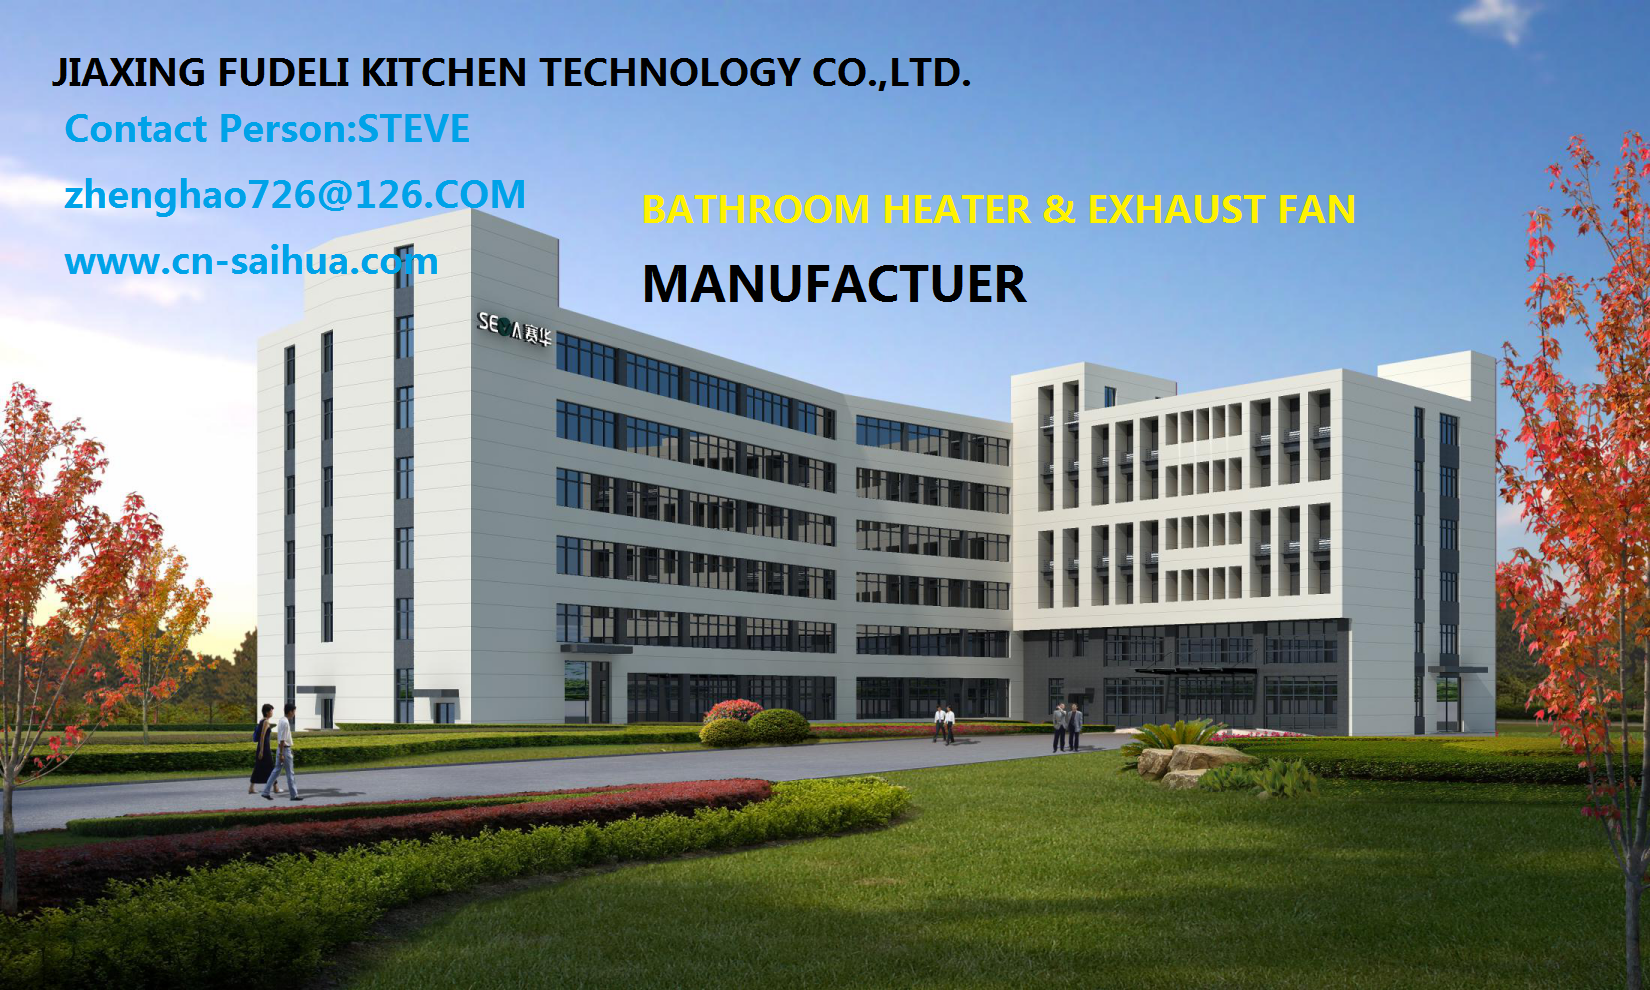 Jiaxing Fudeli Kitchen Technology Co.,Ltd.